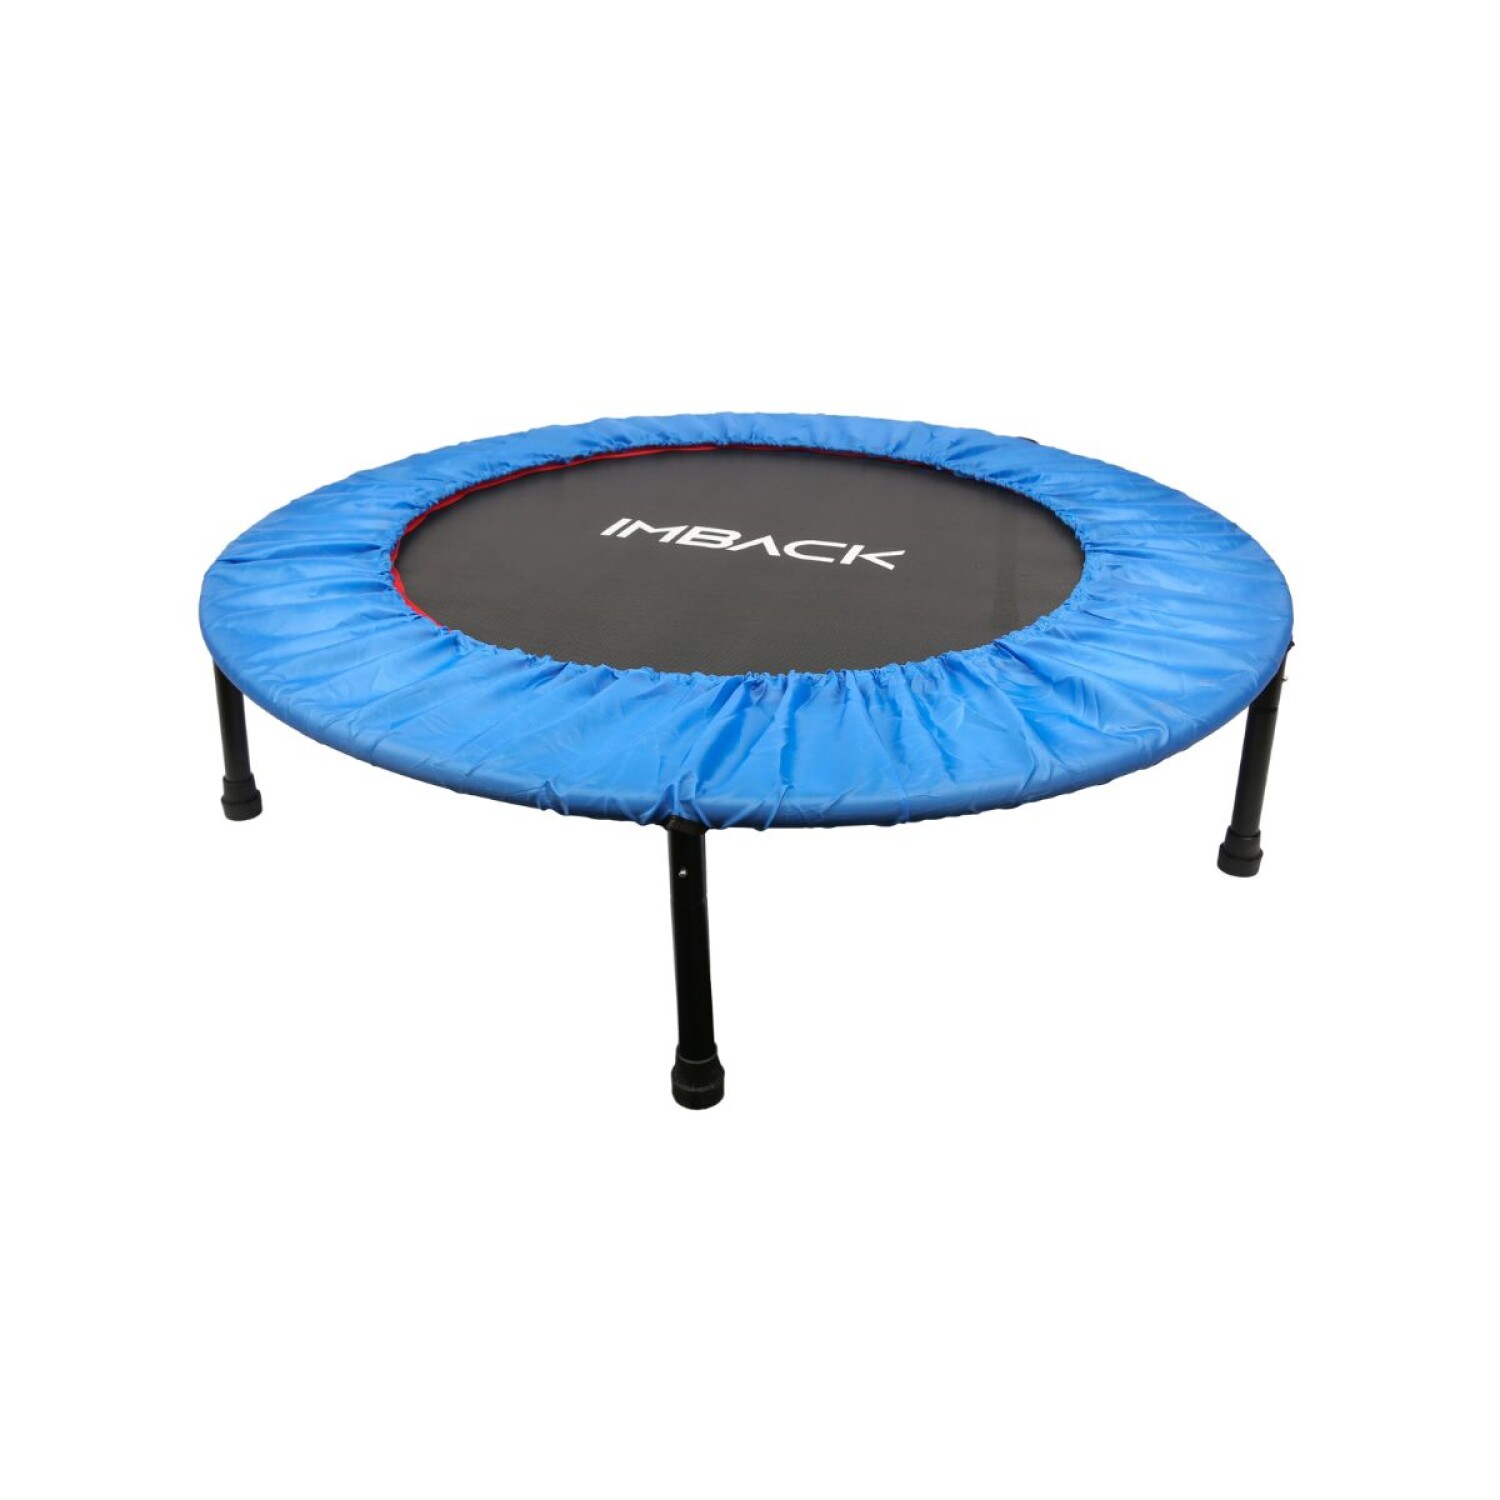 Trampolin, cama elastica, Trampoline, gimnasia en trampoline, cama